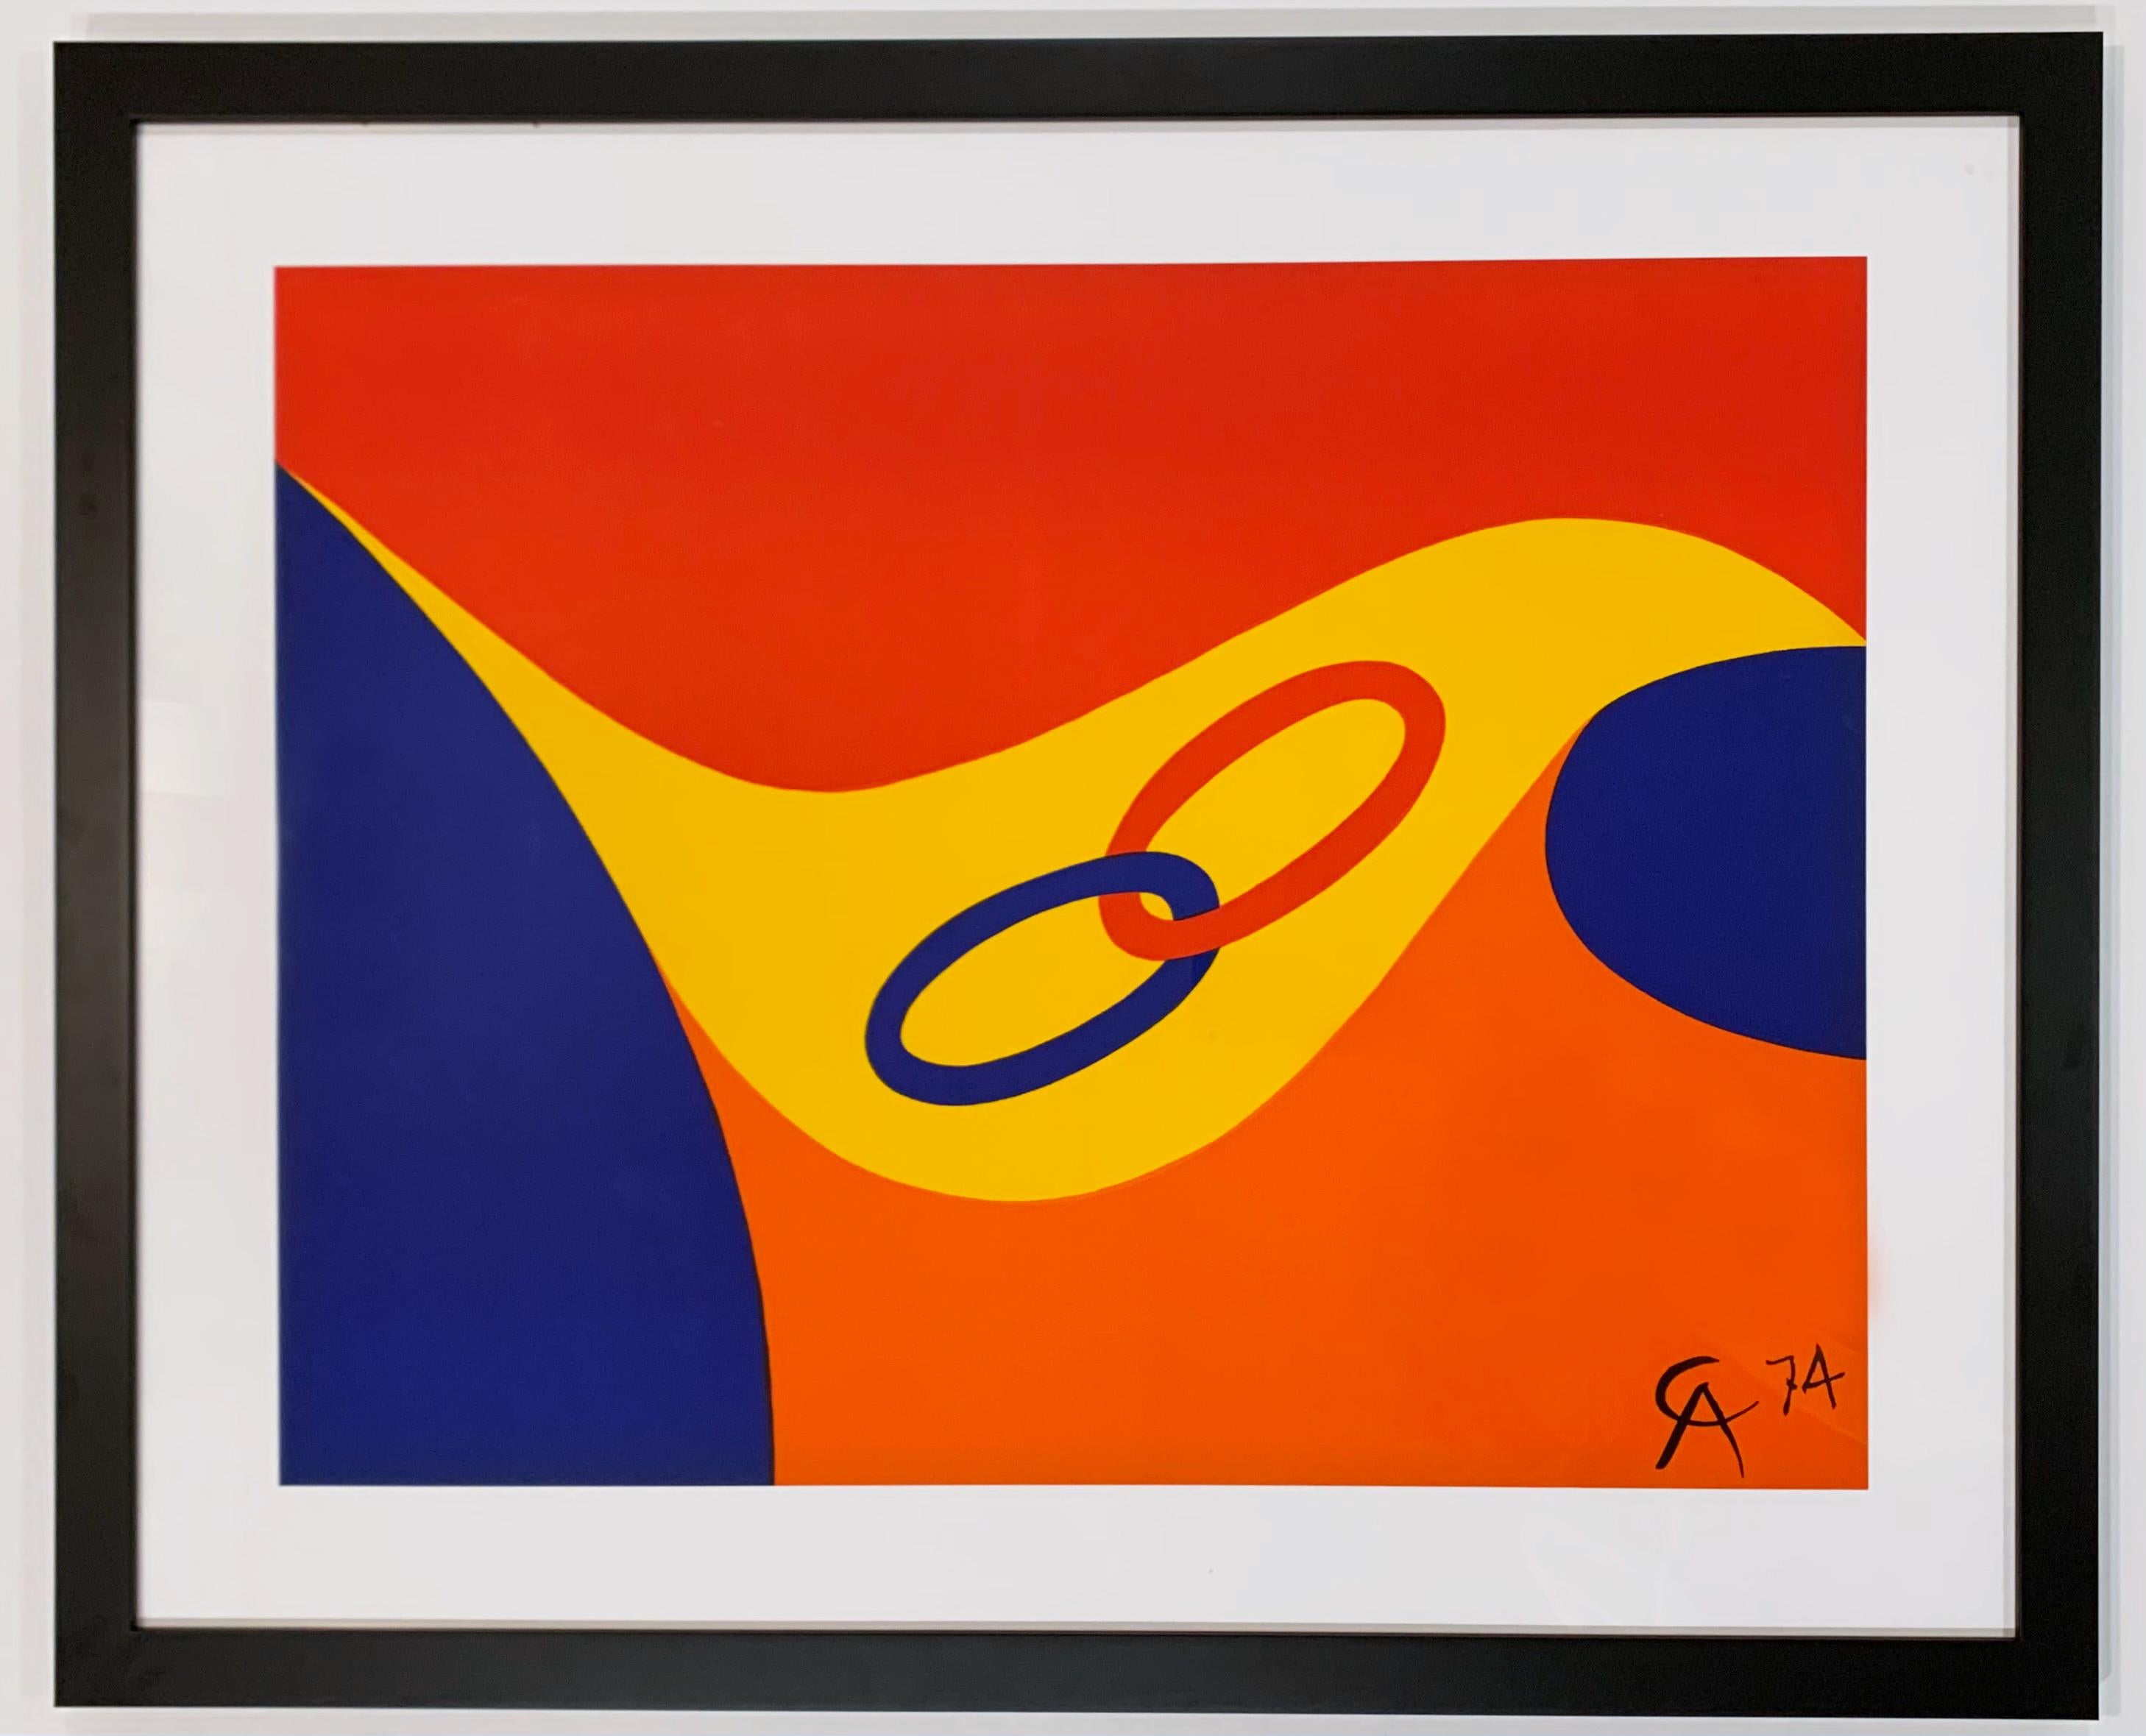 Alexander Calder Friendship
Artist: Alexander Calder
Medium: Original lithograph
Title: Friendship
Portfolio: Flying Colors
Year: 1974
Edition: Open
Signed: In the stone
Framed Size: 33" x 27"
Image Size: 20" x 26" (50.8 x 66 cm)
Sheet Size: 20" x